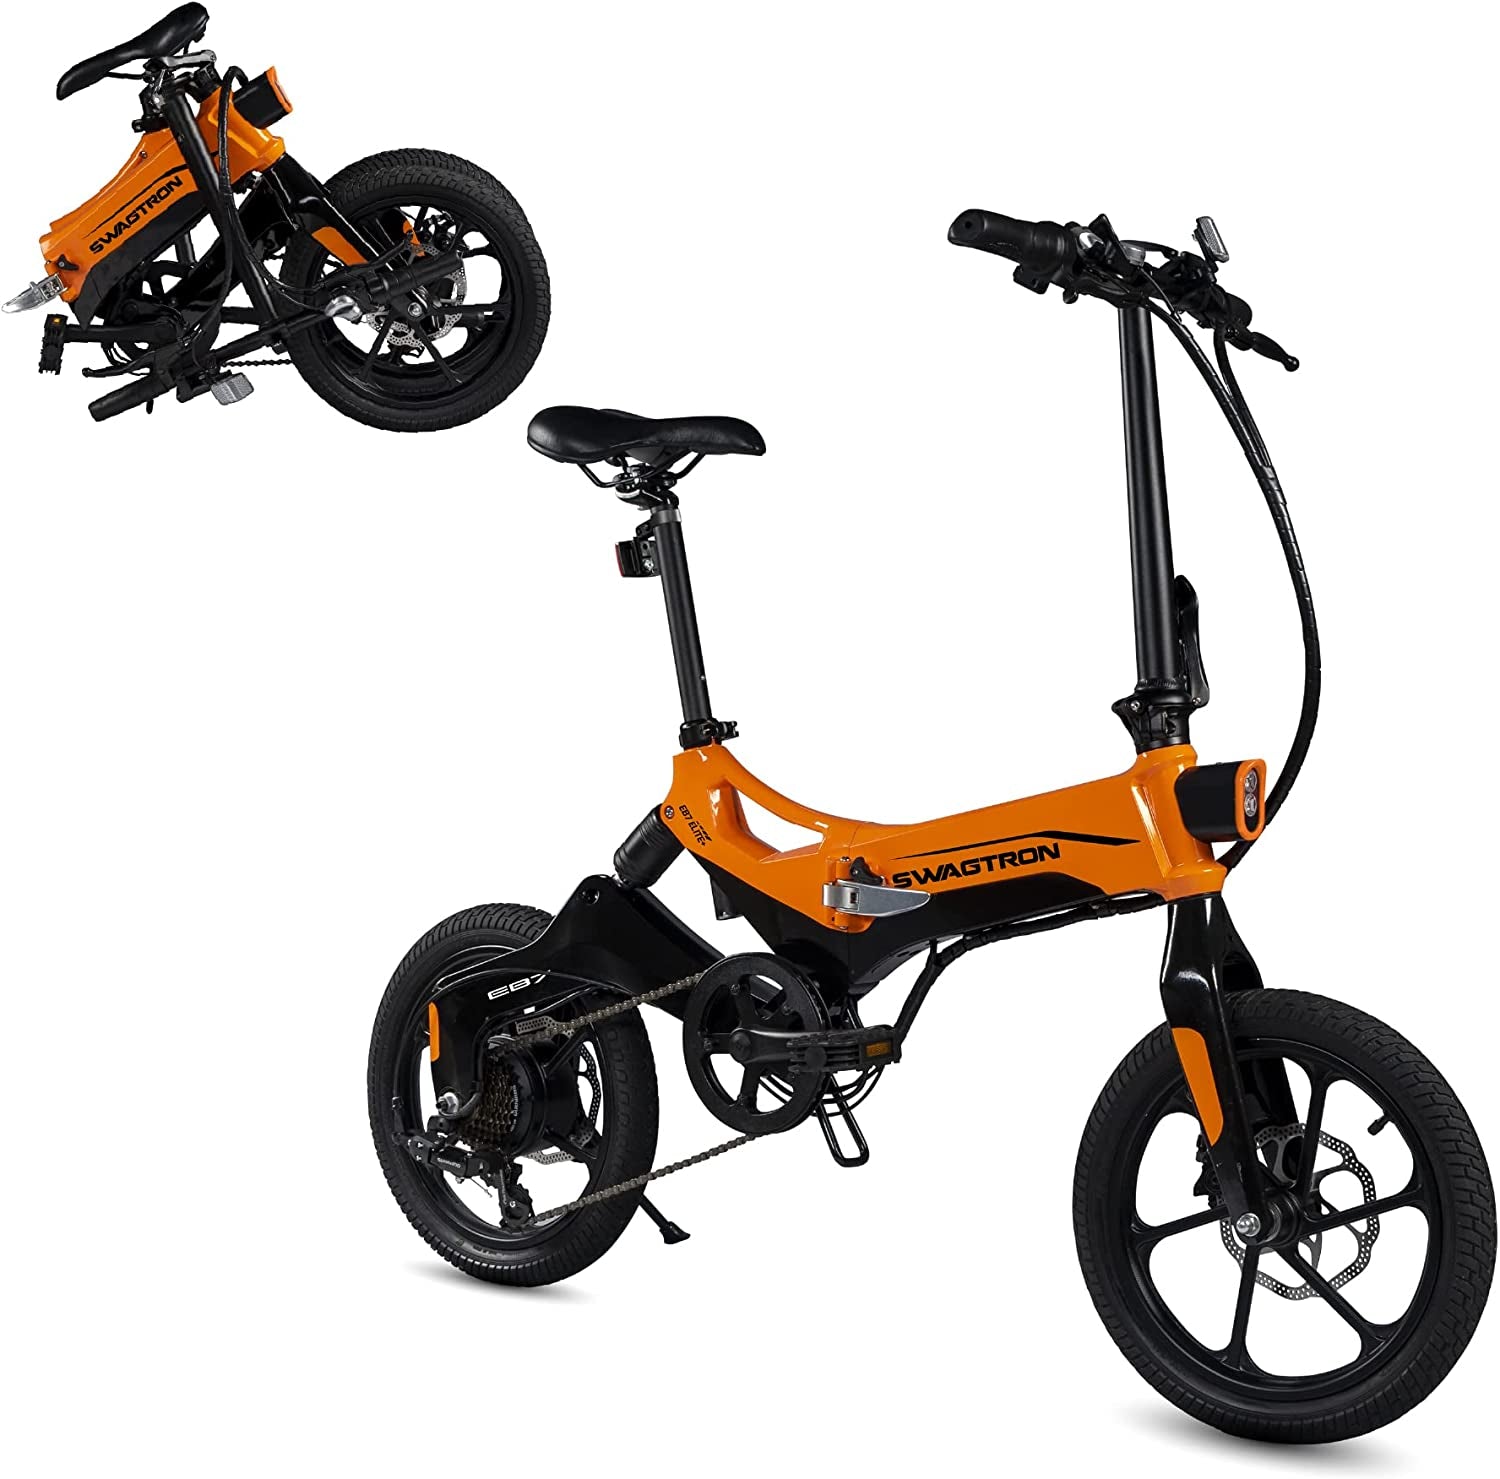 Swagcycle EB-7 Elite plus Folding Electric Bike with Removable Battery, Orange/Black, 16" Wheels, 7-Speed